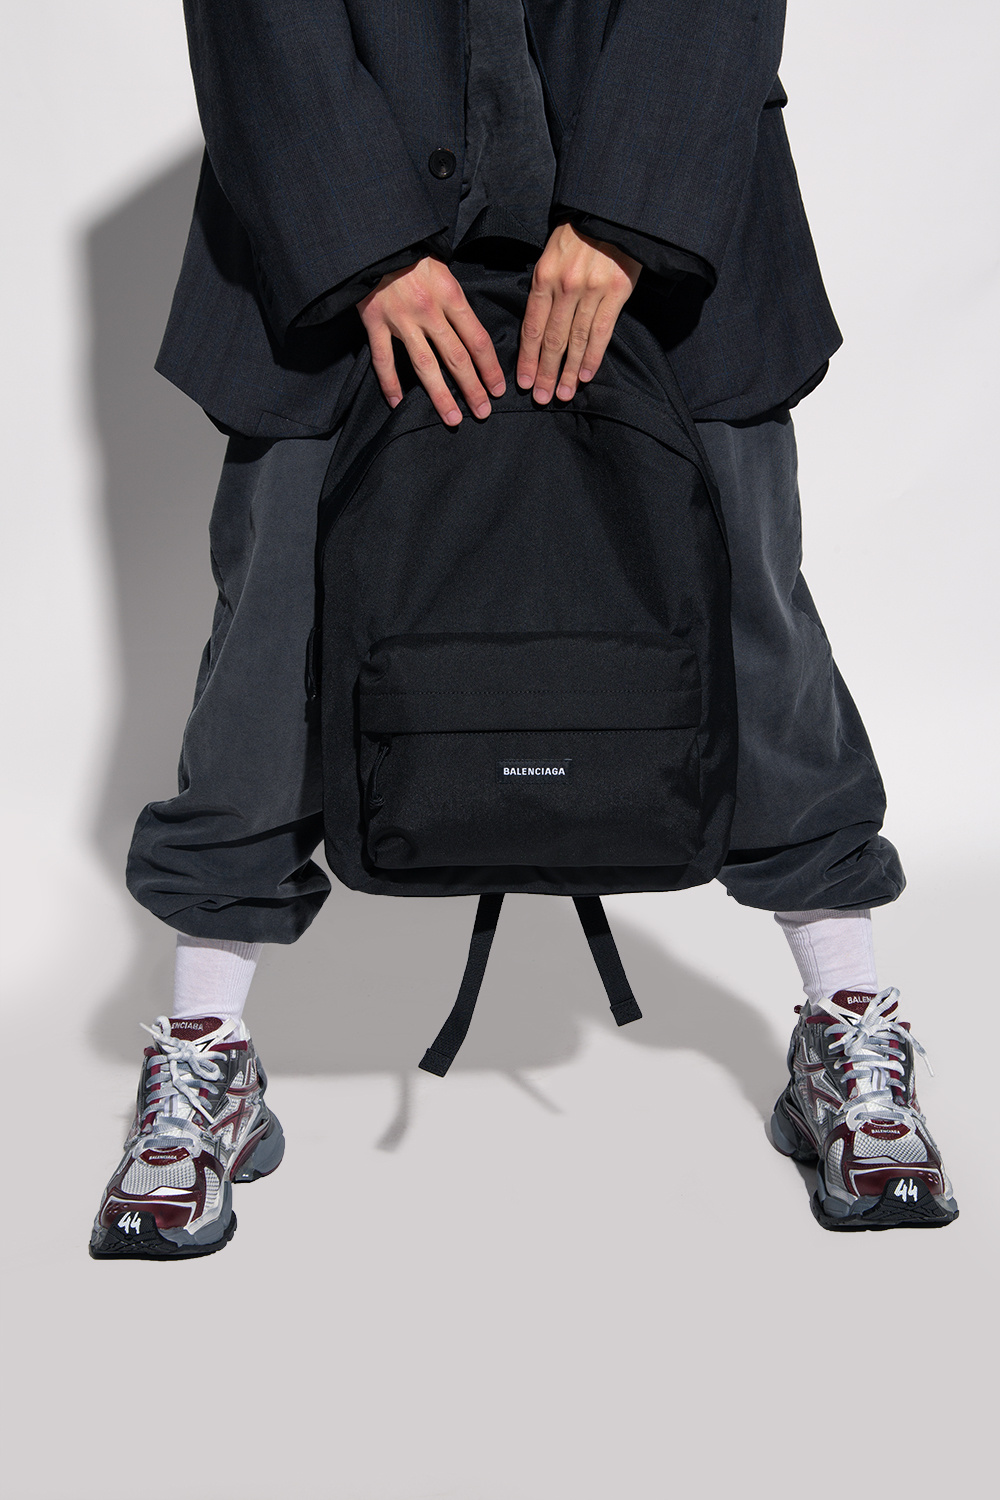 Balenciaga ‘Explorer’ backpack | Men's Bags | Vitkac